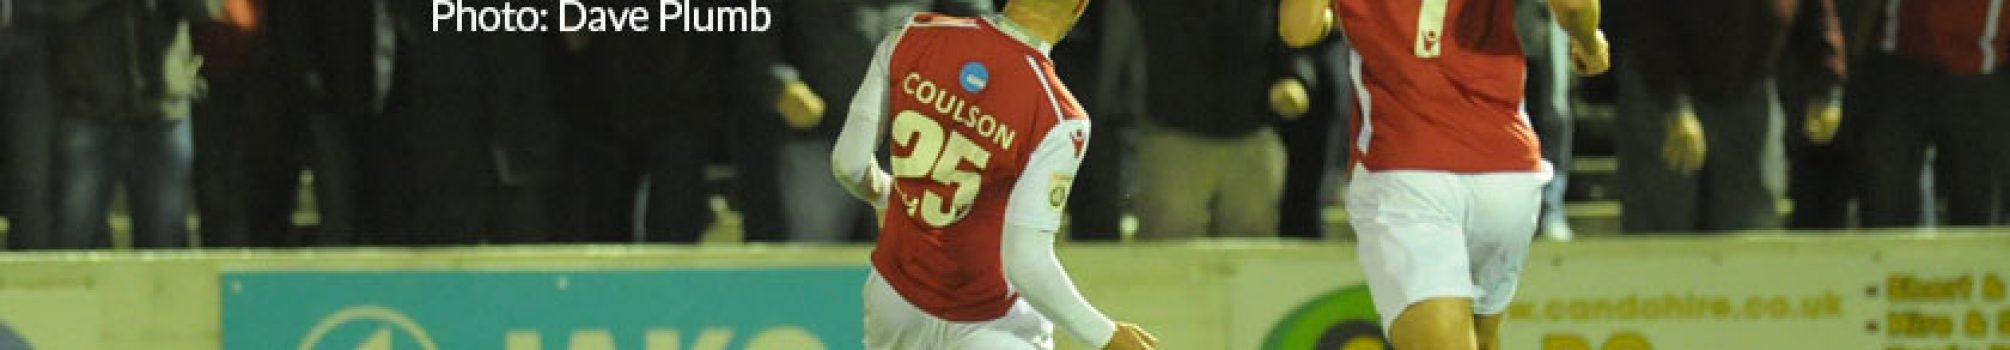 coulson-goal